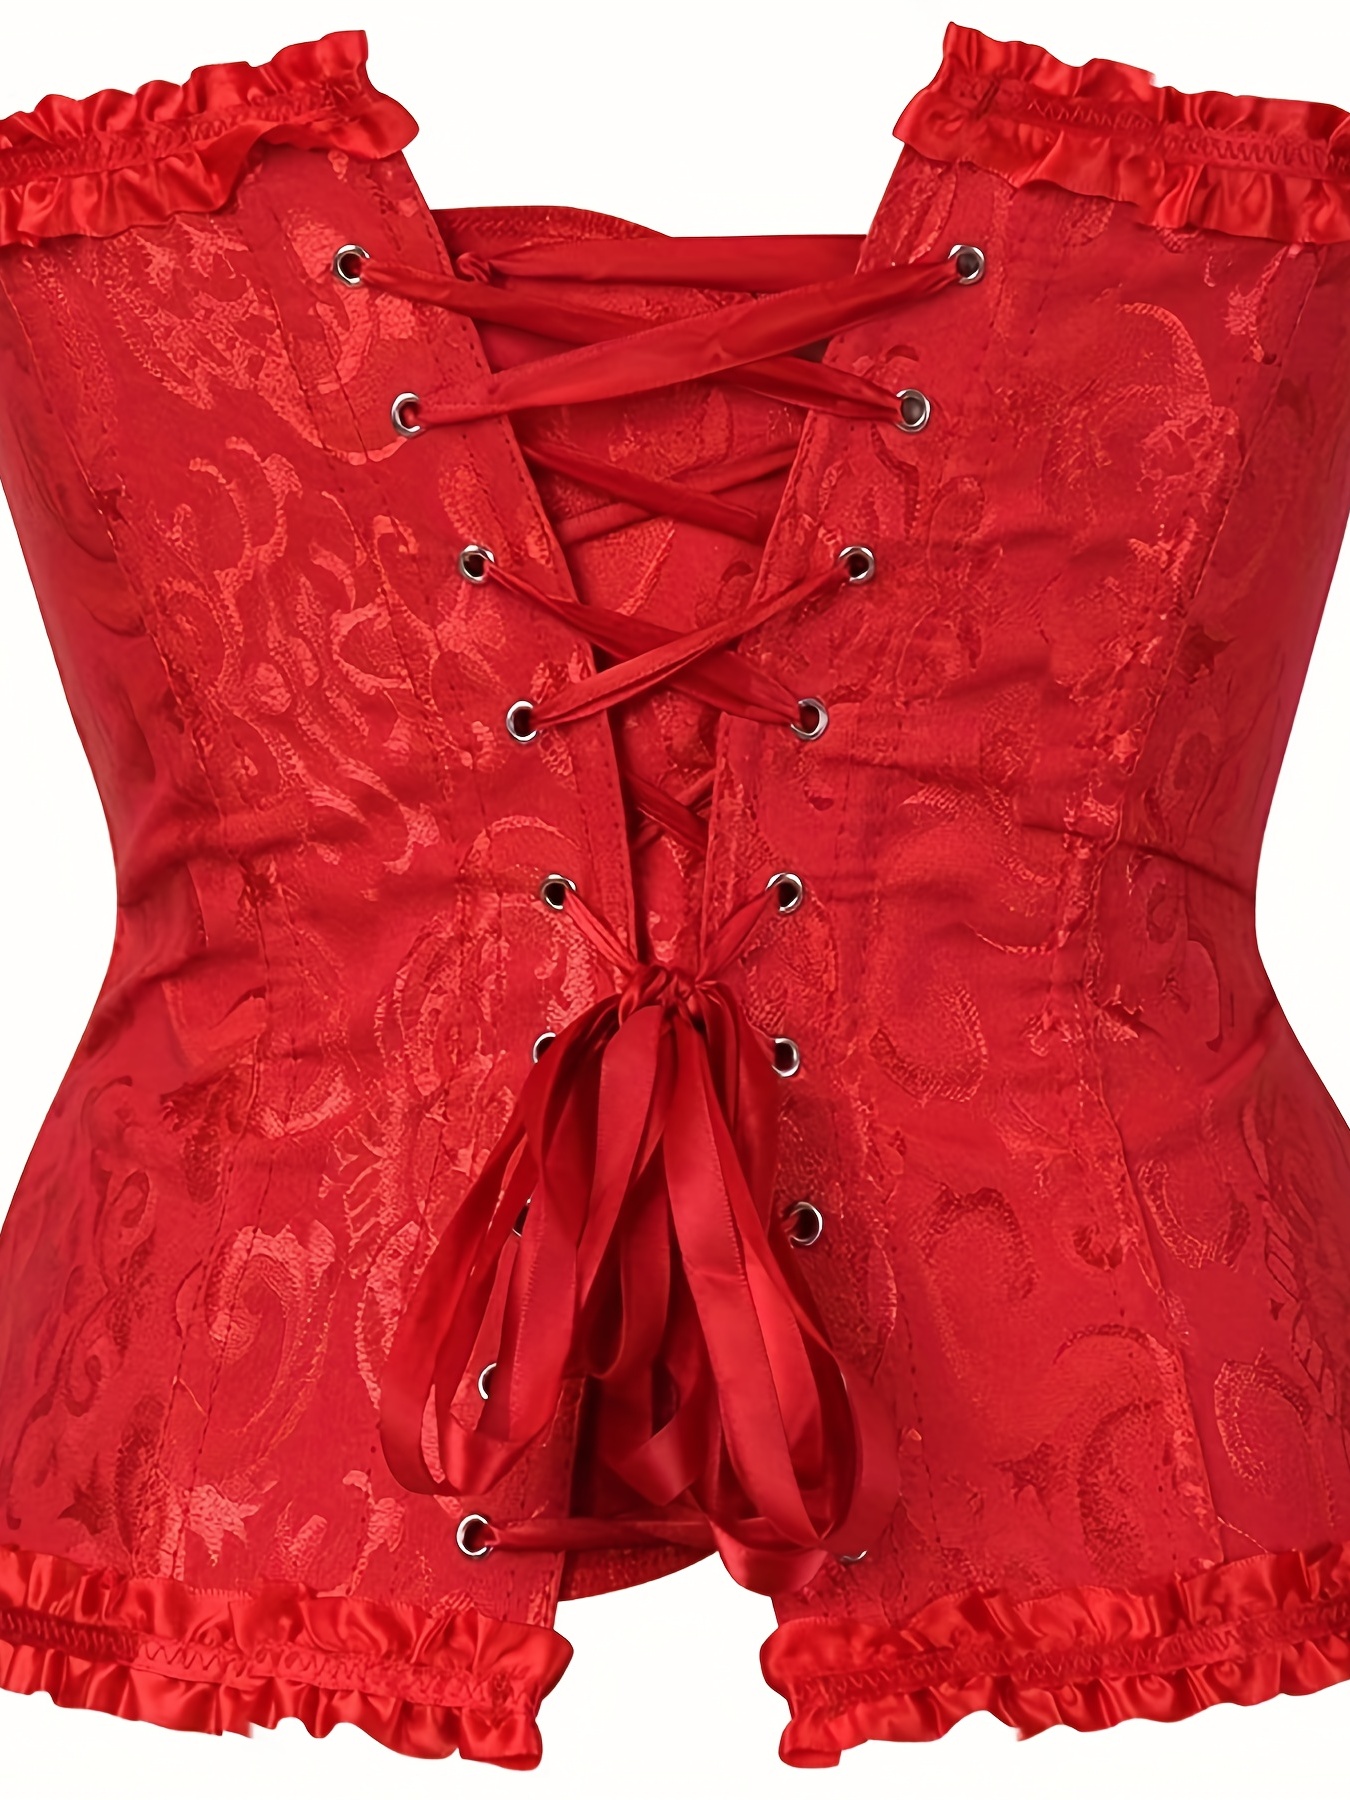 Aayomet Bodysuit Shapewear for Women Women's Lace Corset Satin Corset  Cutting Push-up Belt Waist Trainer Burner,Red XL